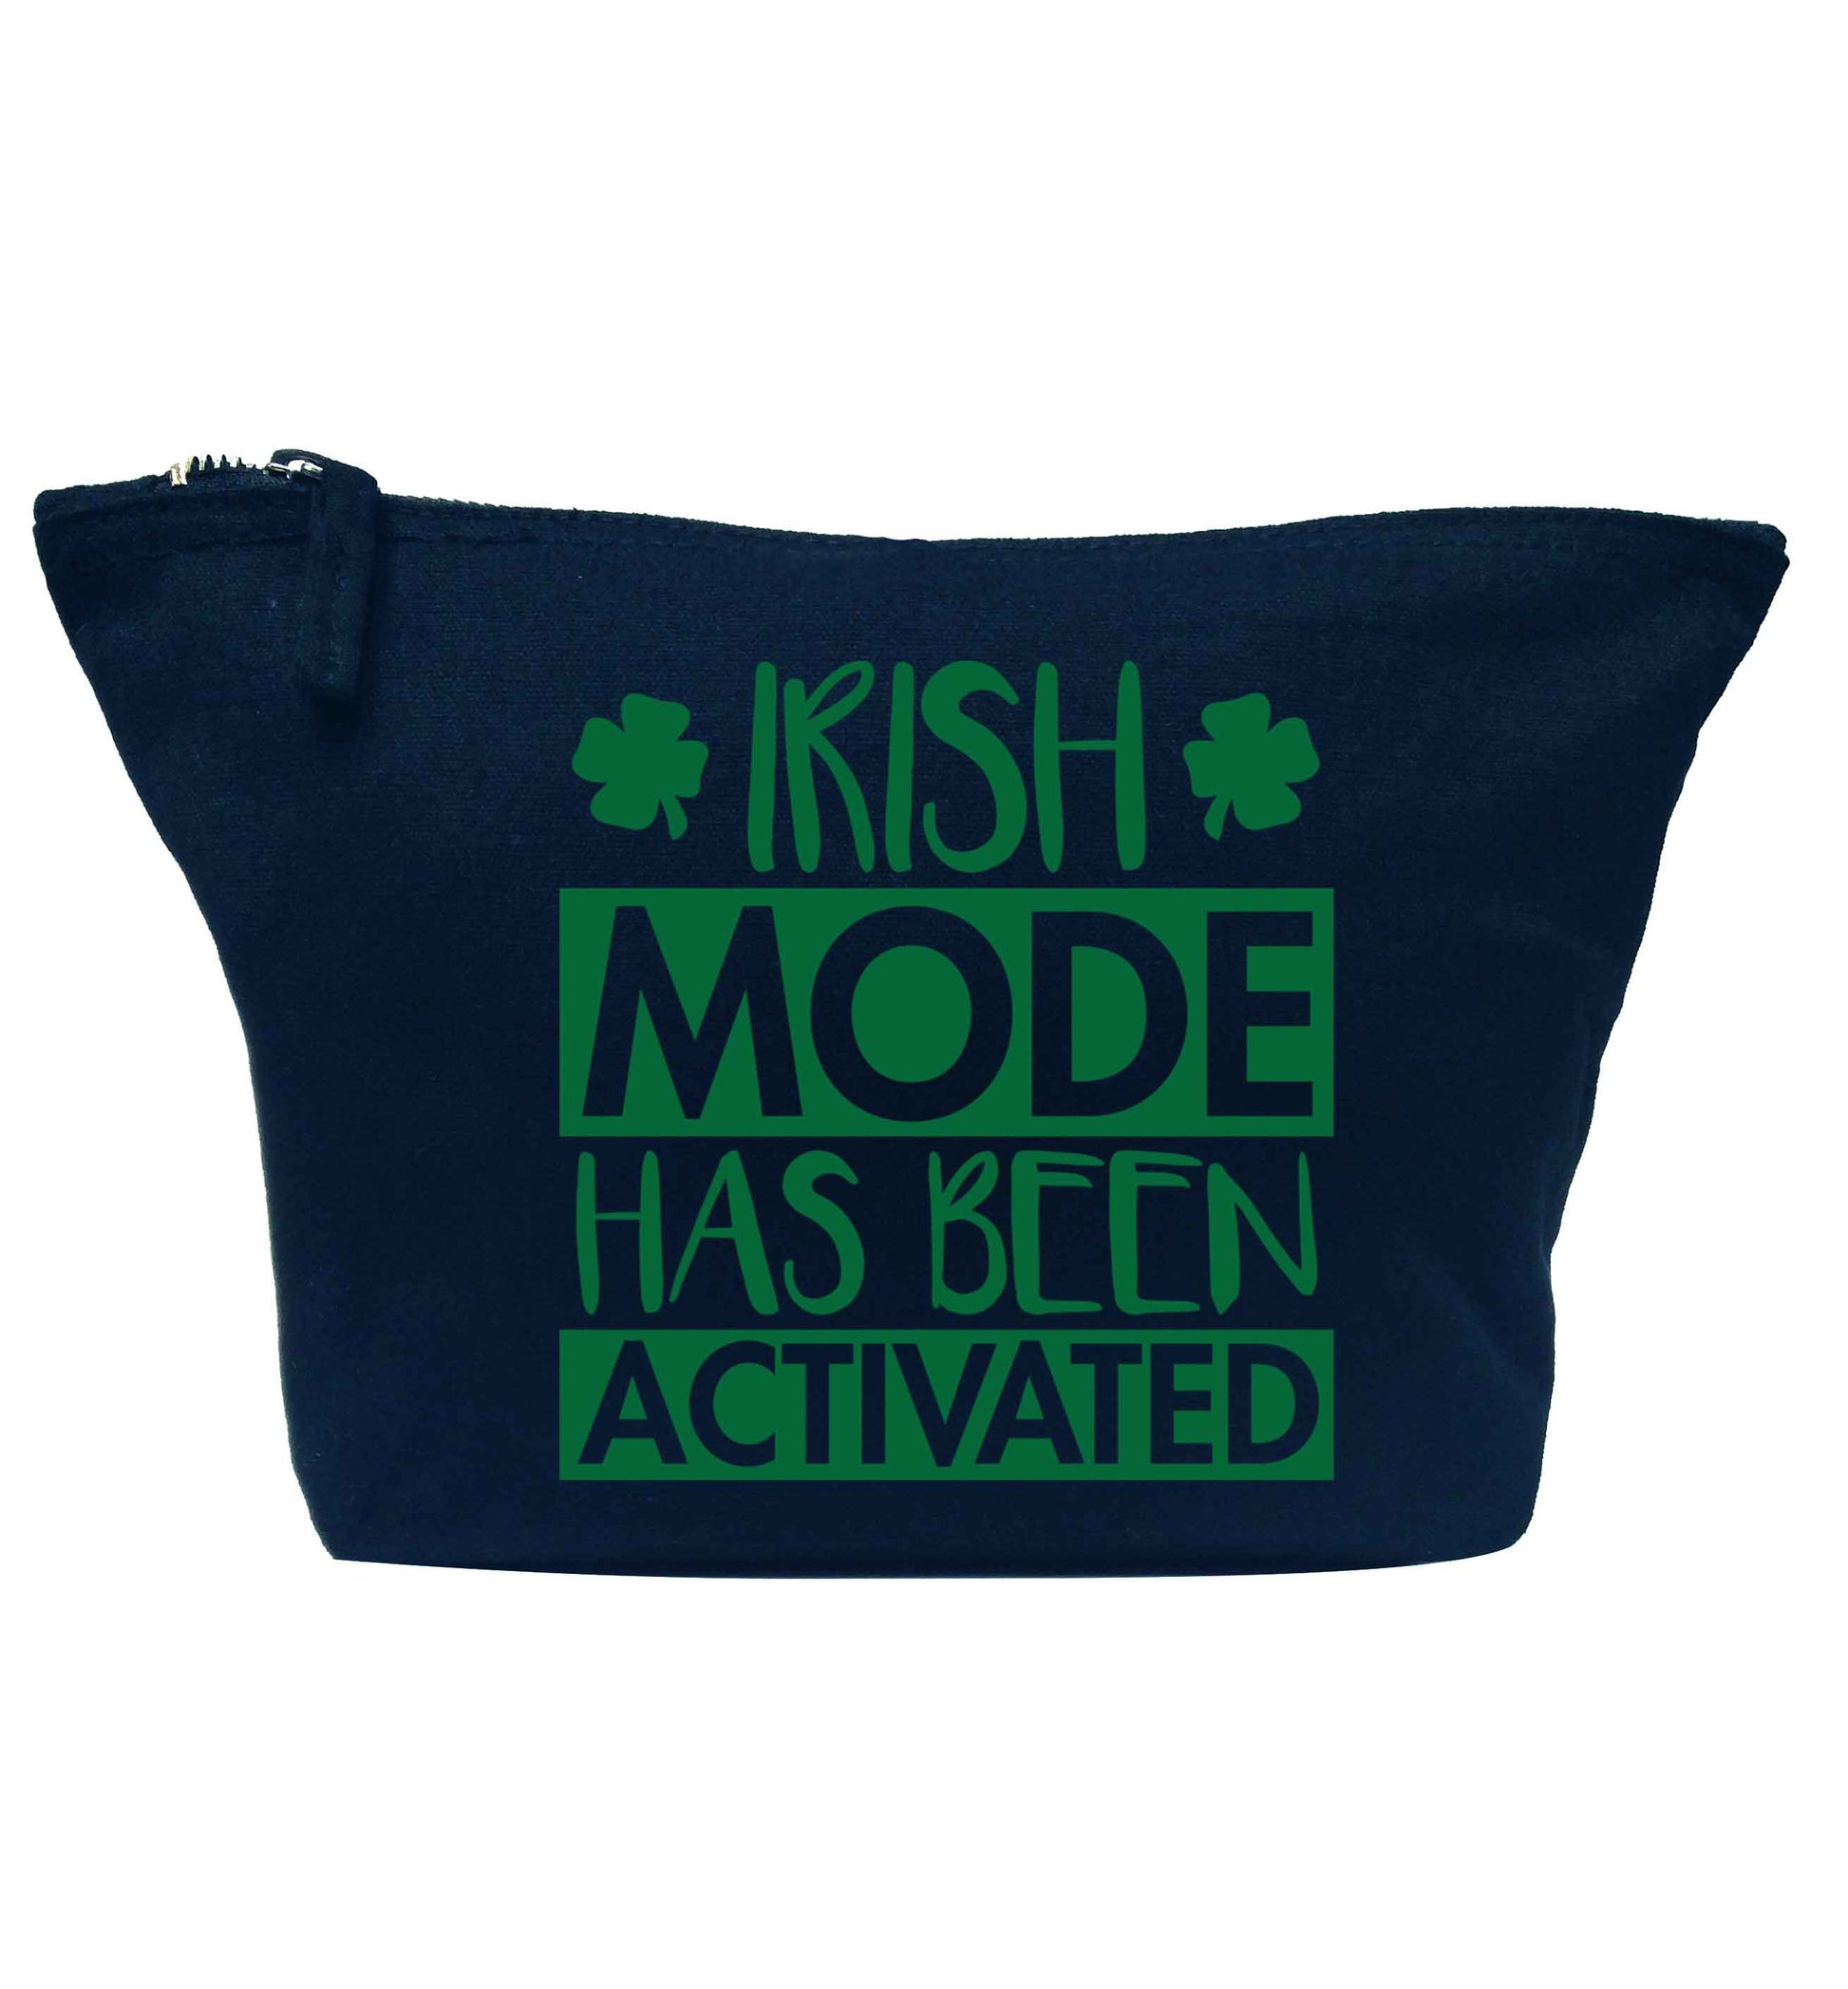 Irish mode has been activated navy makeup bag